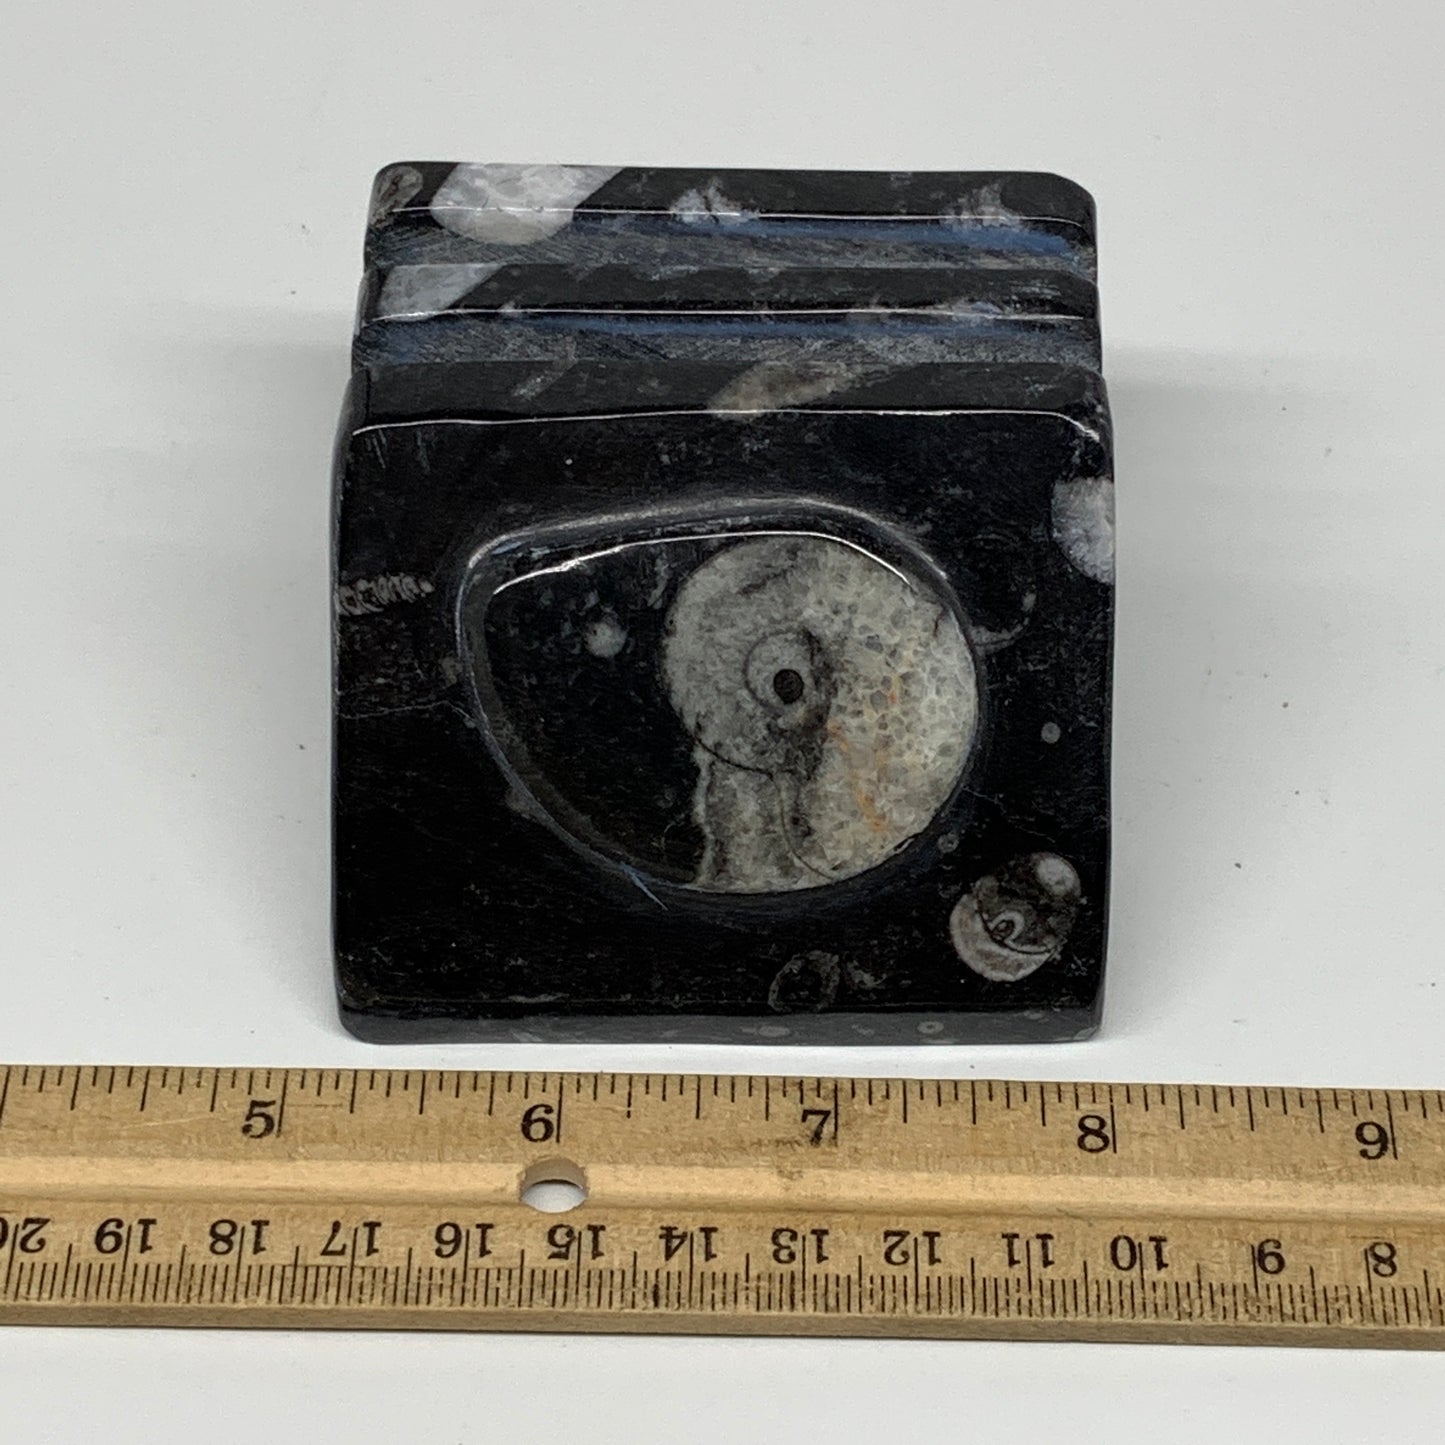 506g, 2.8" x 2.9" x 1.9" Black Fossils Orthoceras Ammonite Business Card Holder,